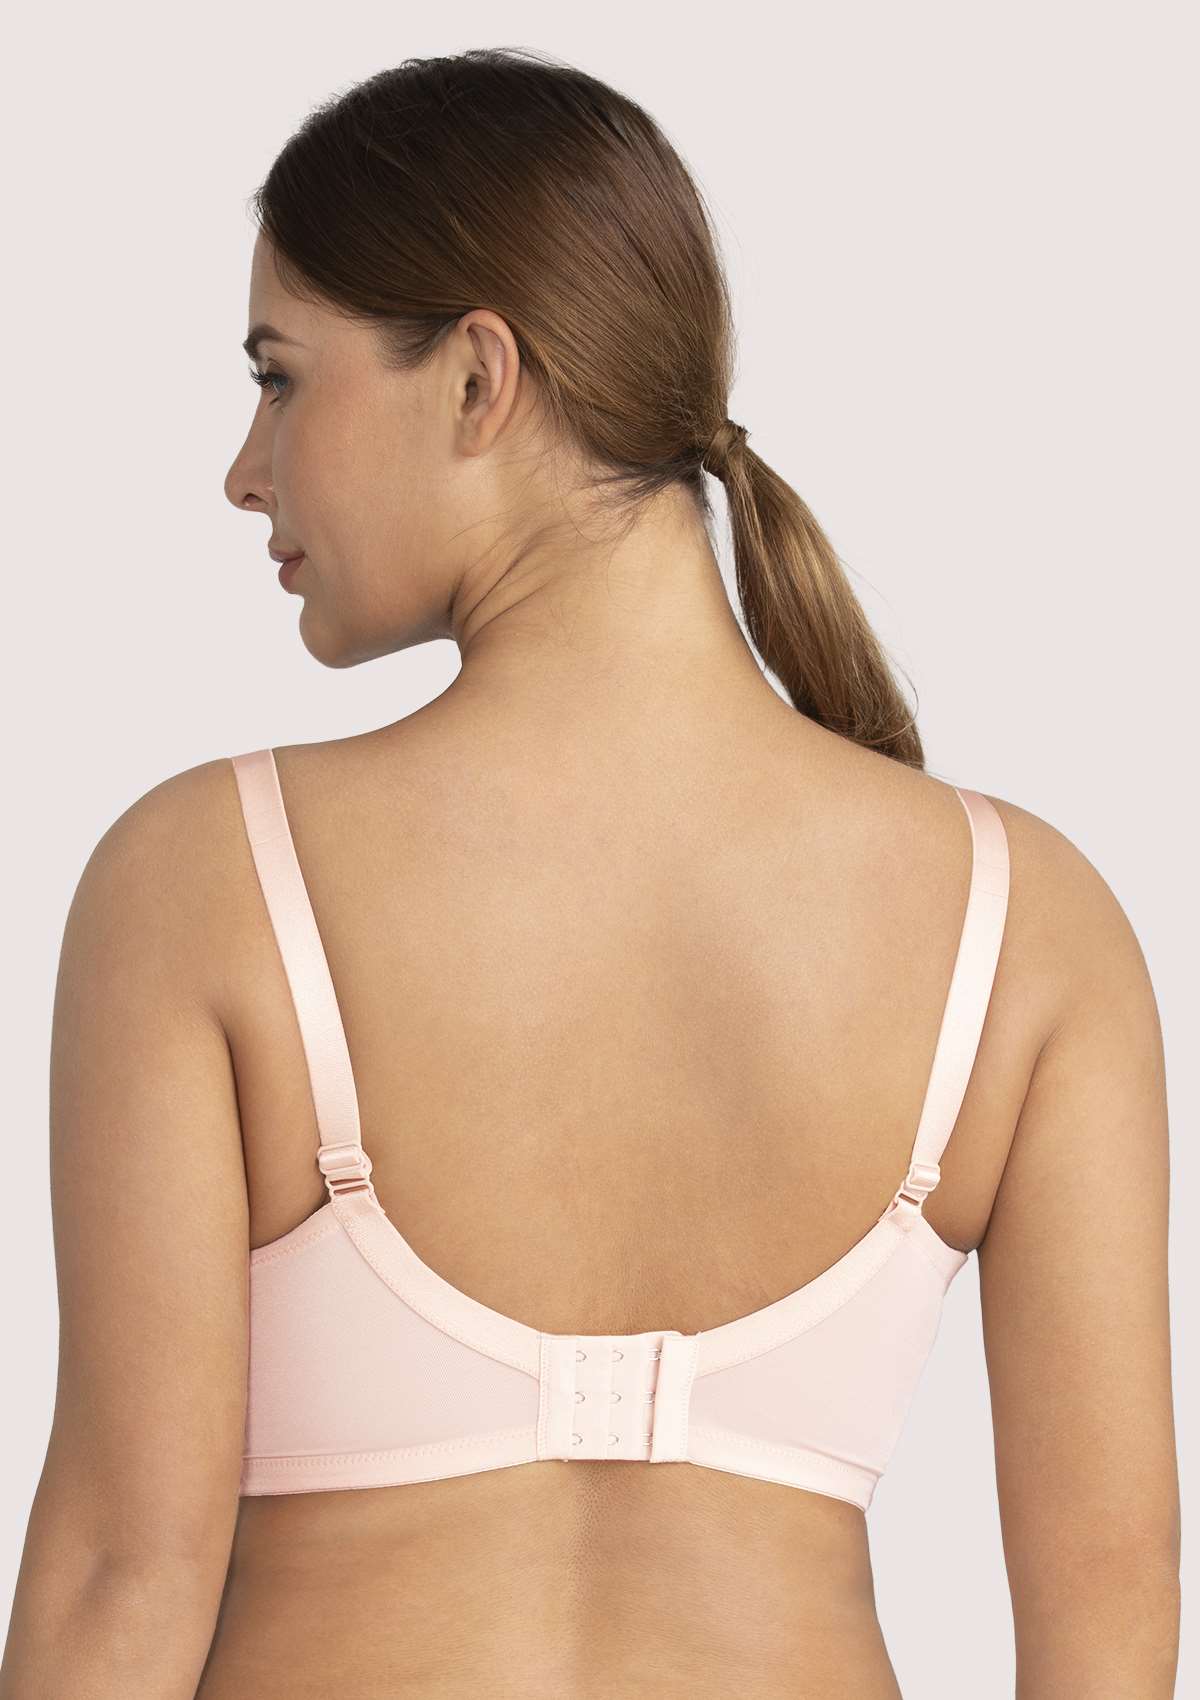 HSIA Sunflower Matching Bra And Panties Set: Comfortable Plus Size Bra - Pink / 42 / H